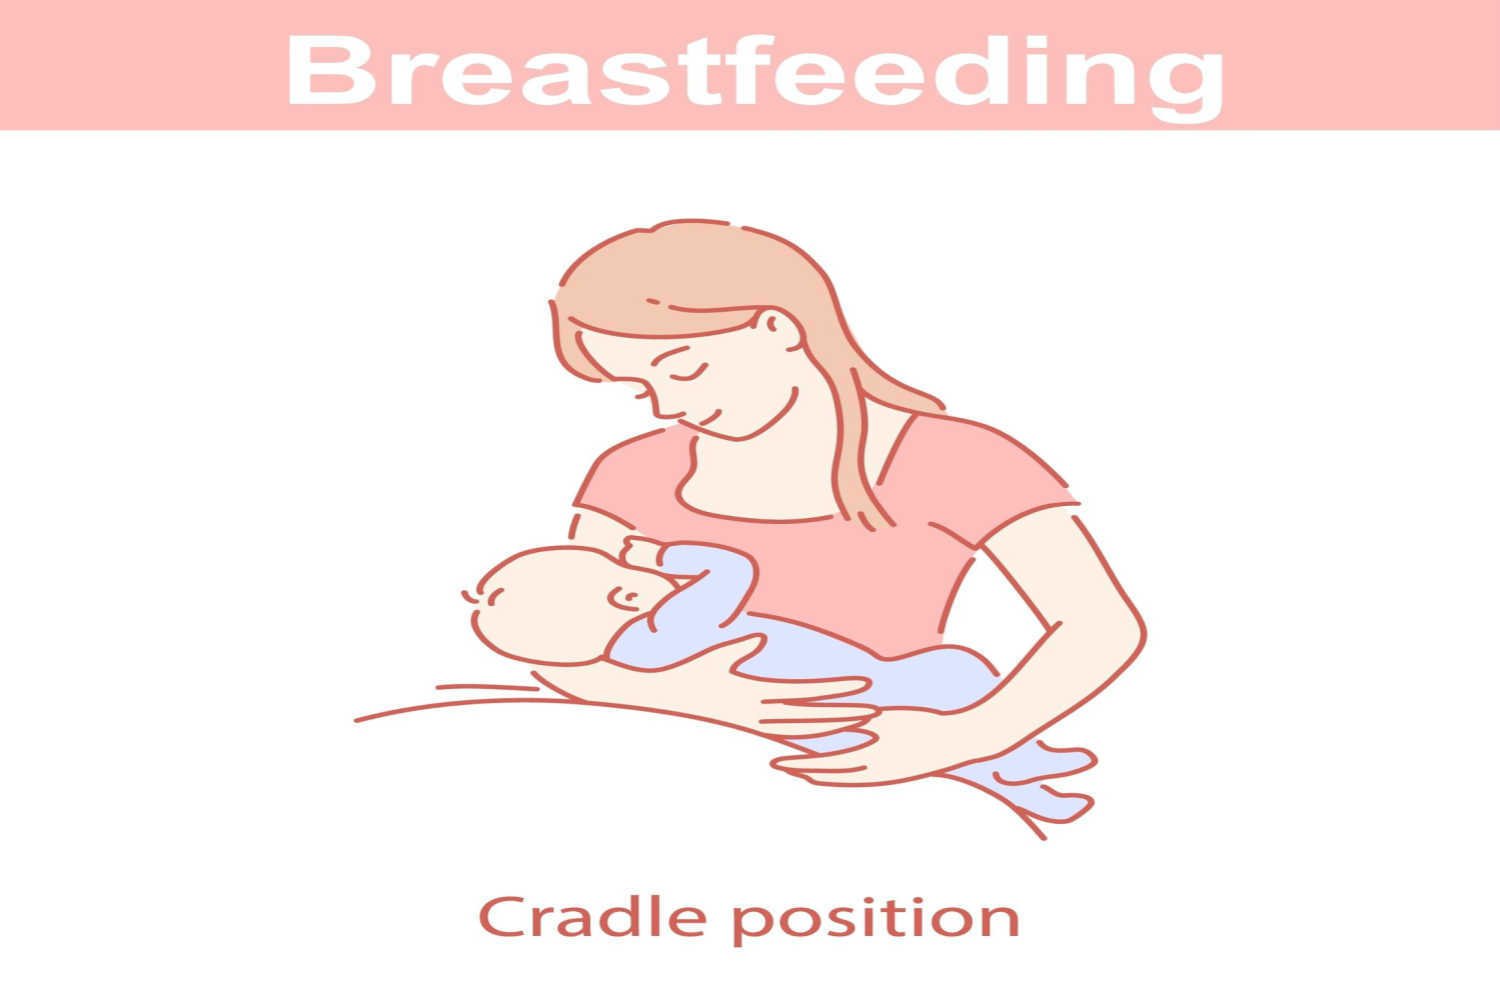 Cradle Hold breastfeeding position